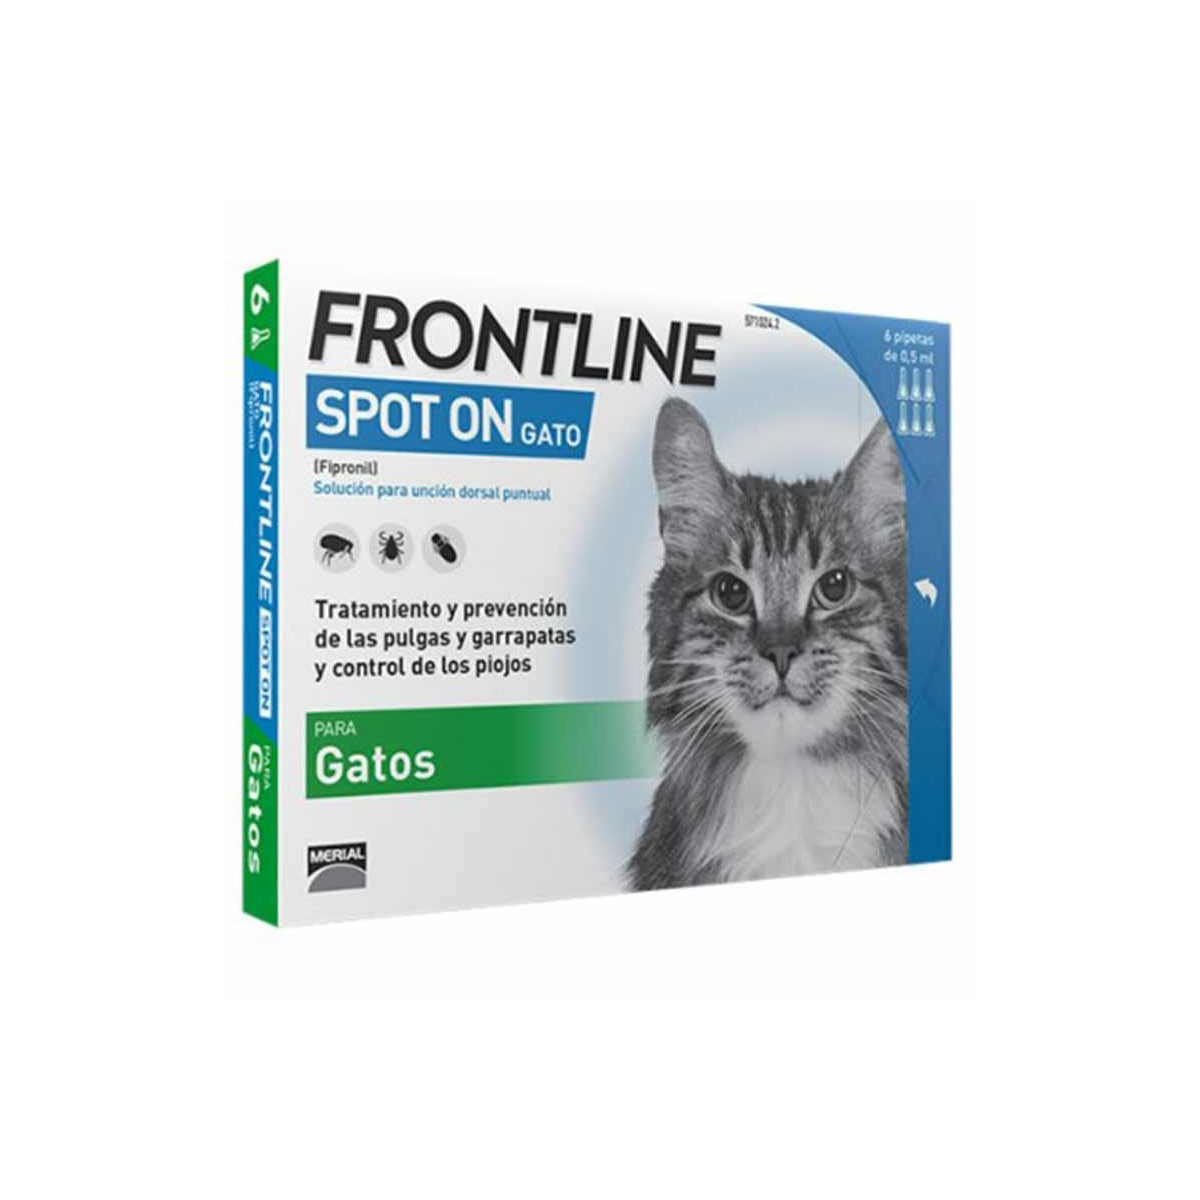 Frontline Spot On gatos 